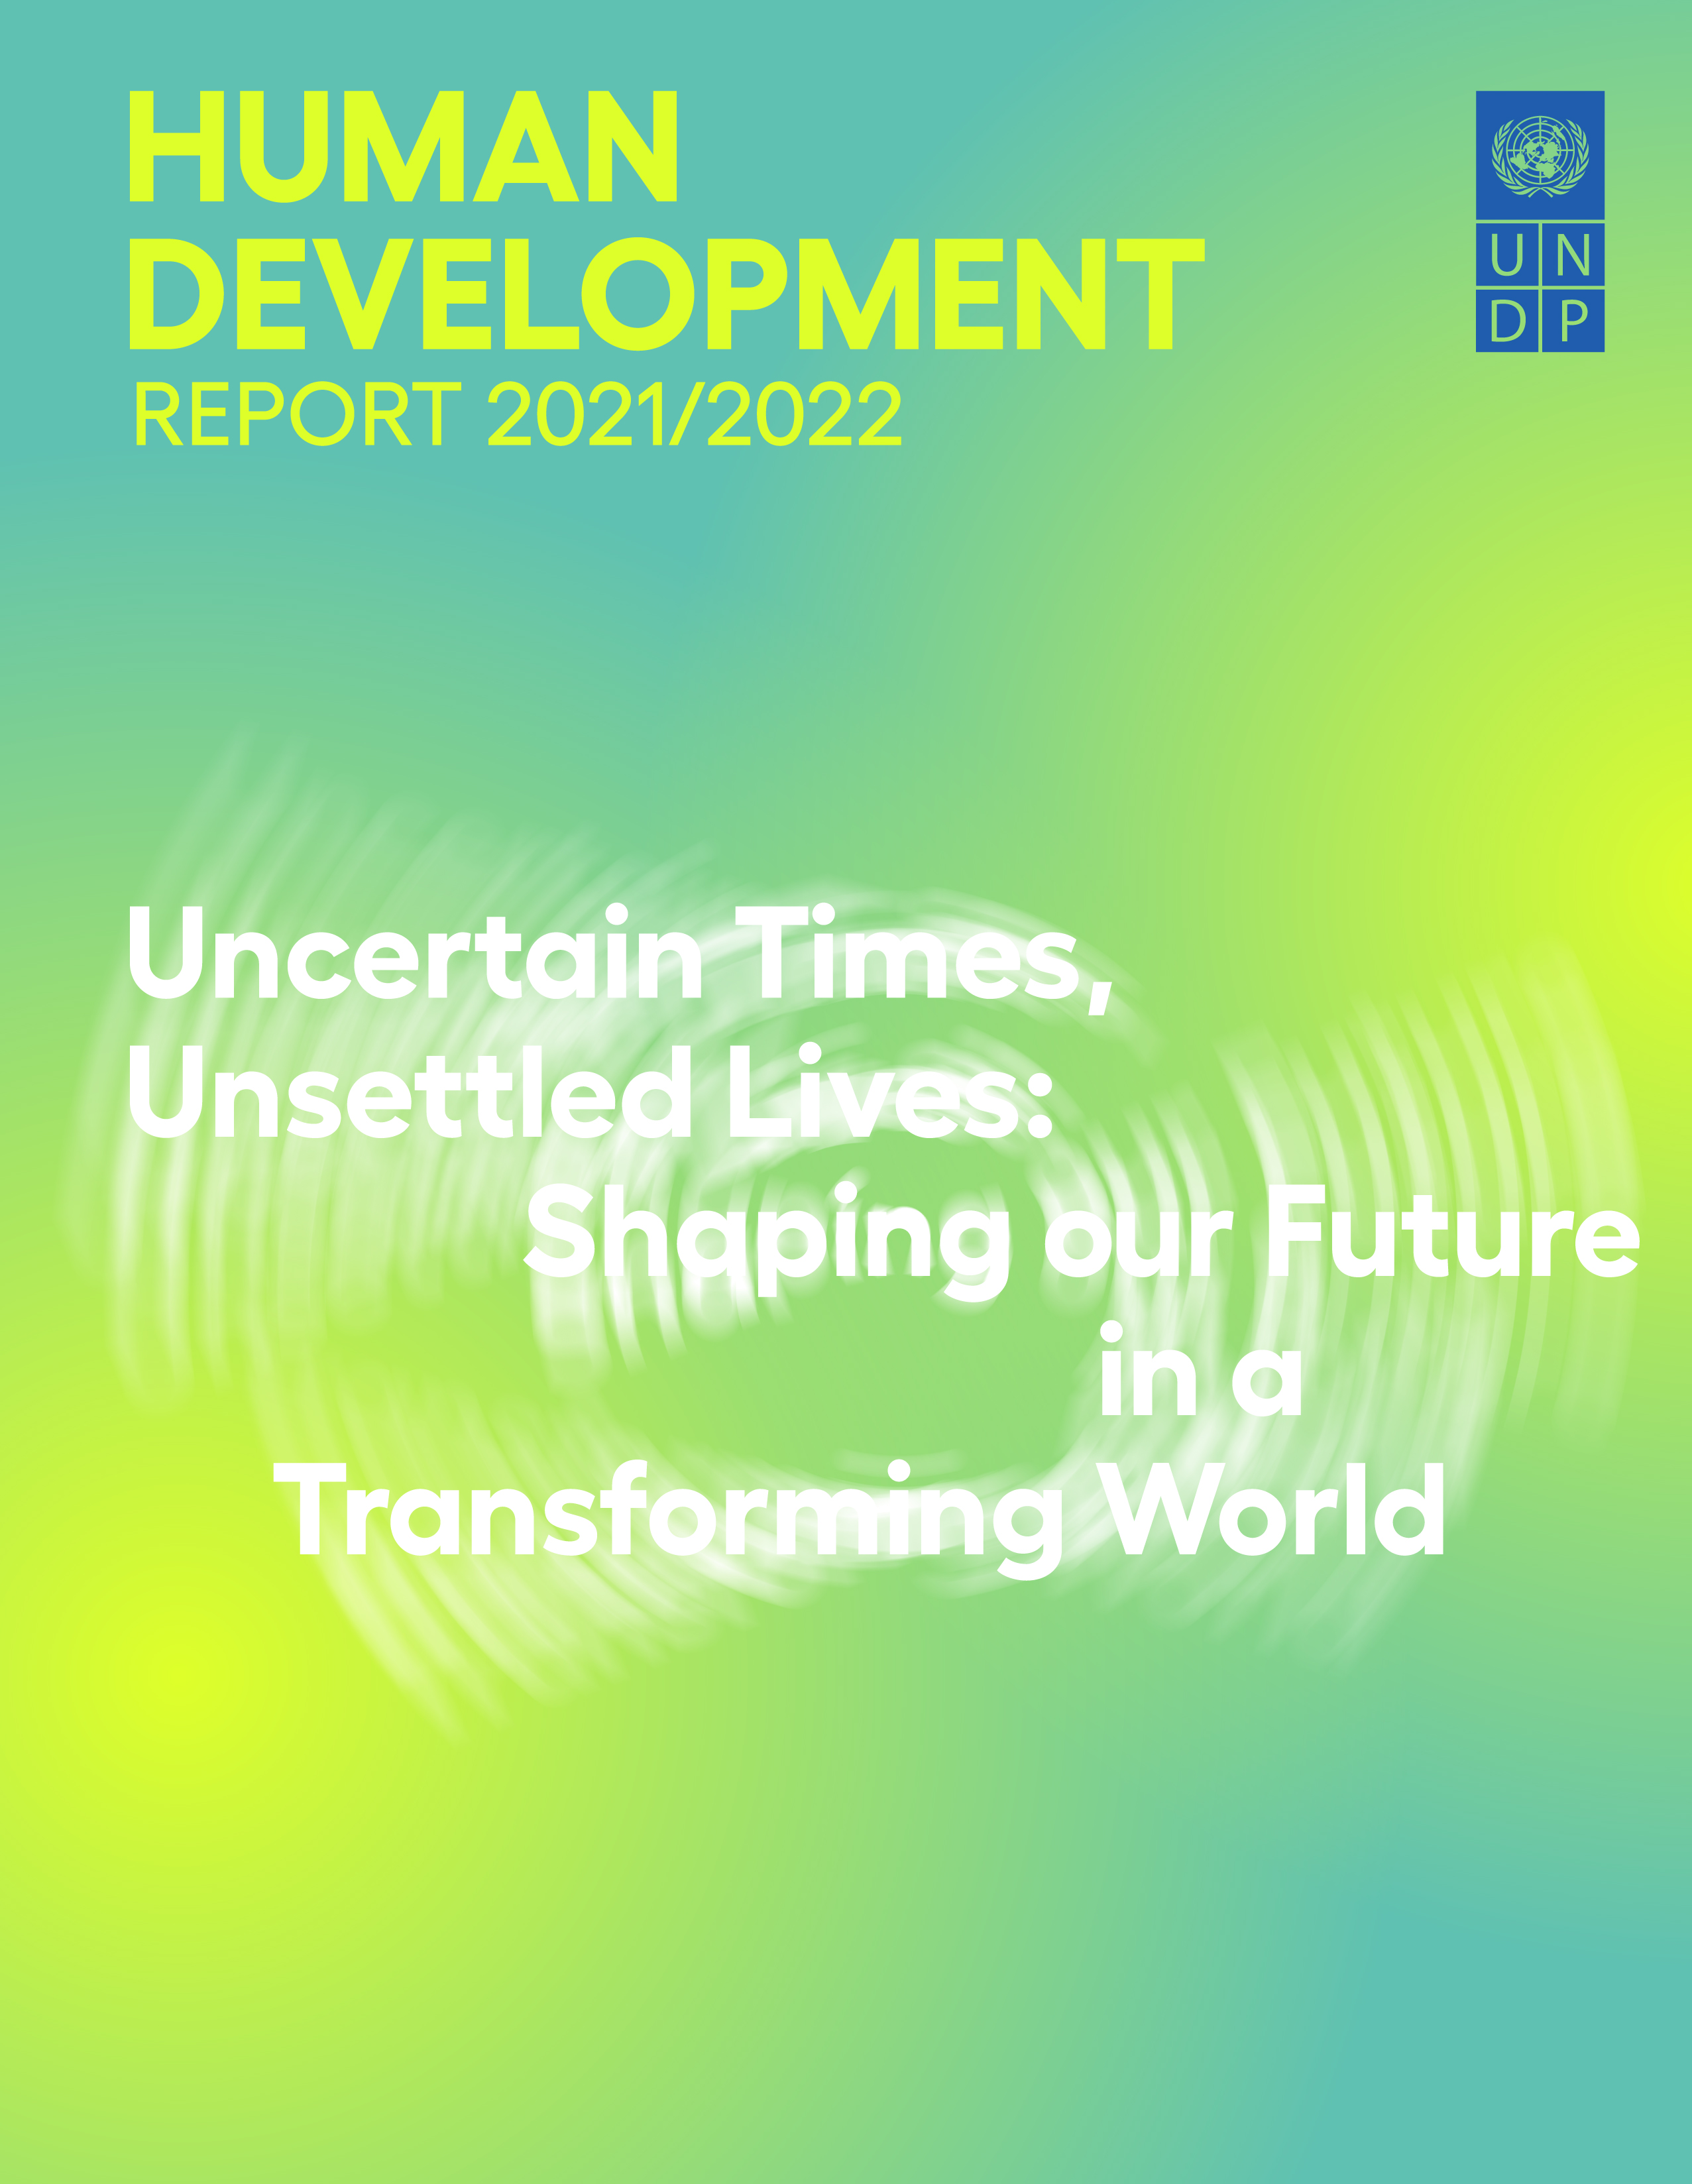 Human Development Report 2021/2022 - 15-24.99